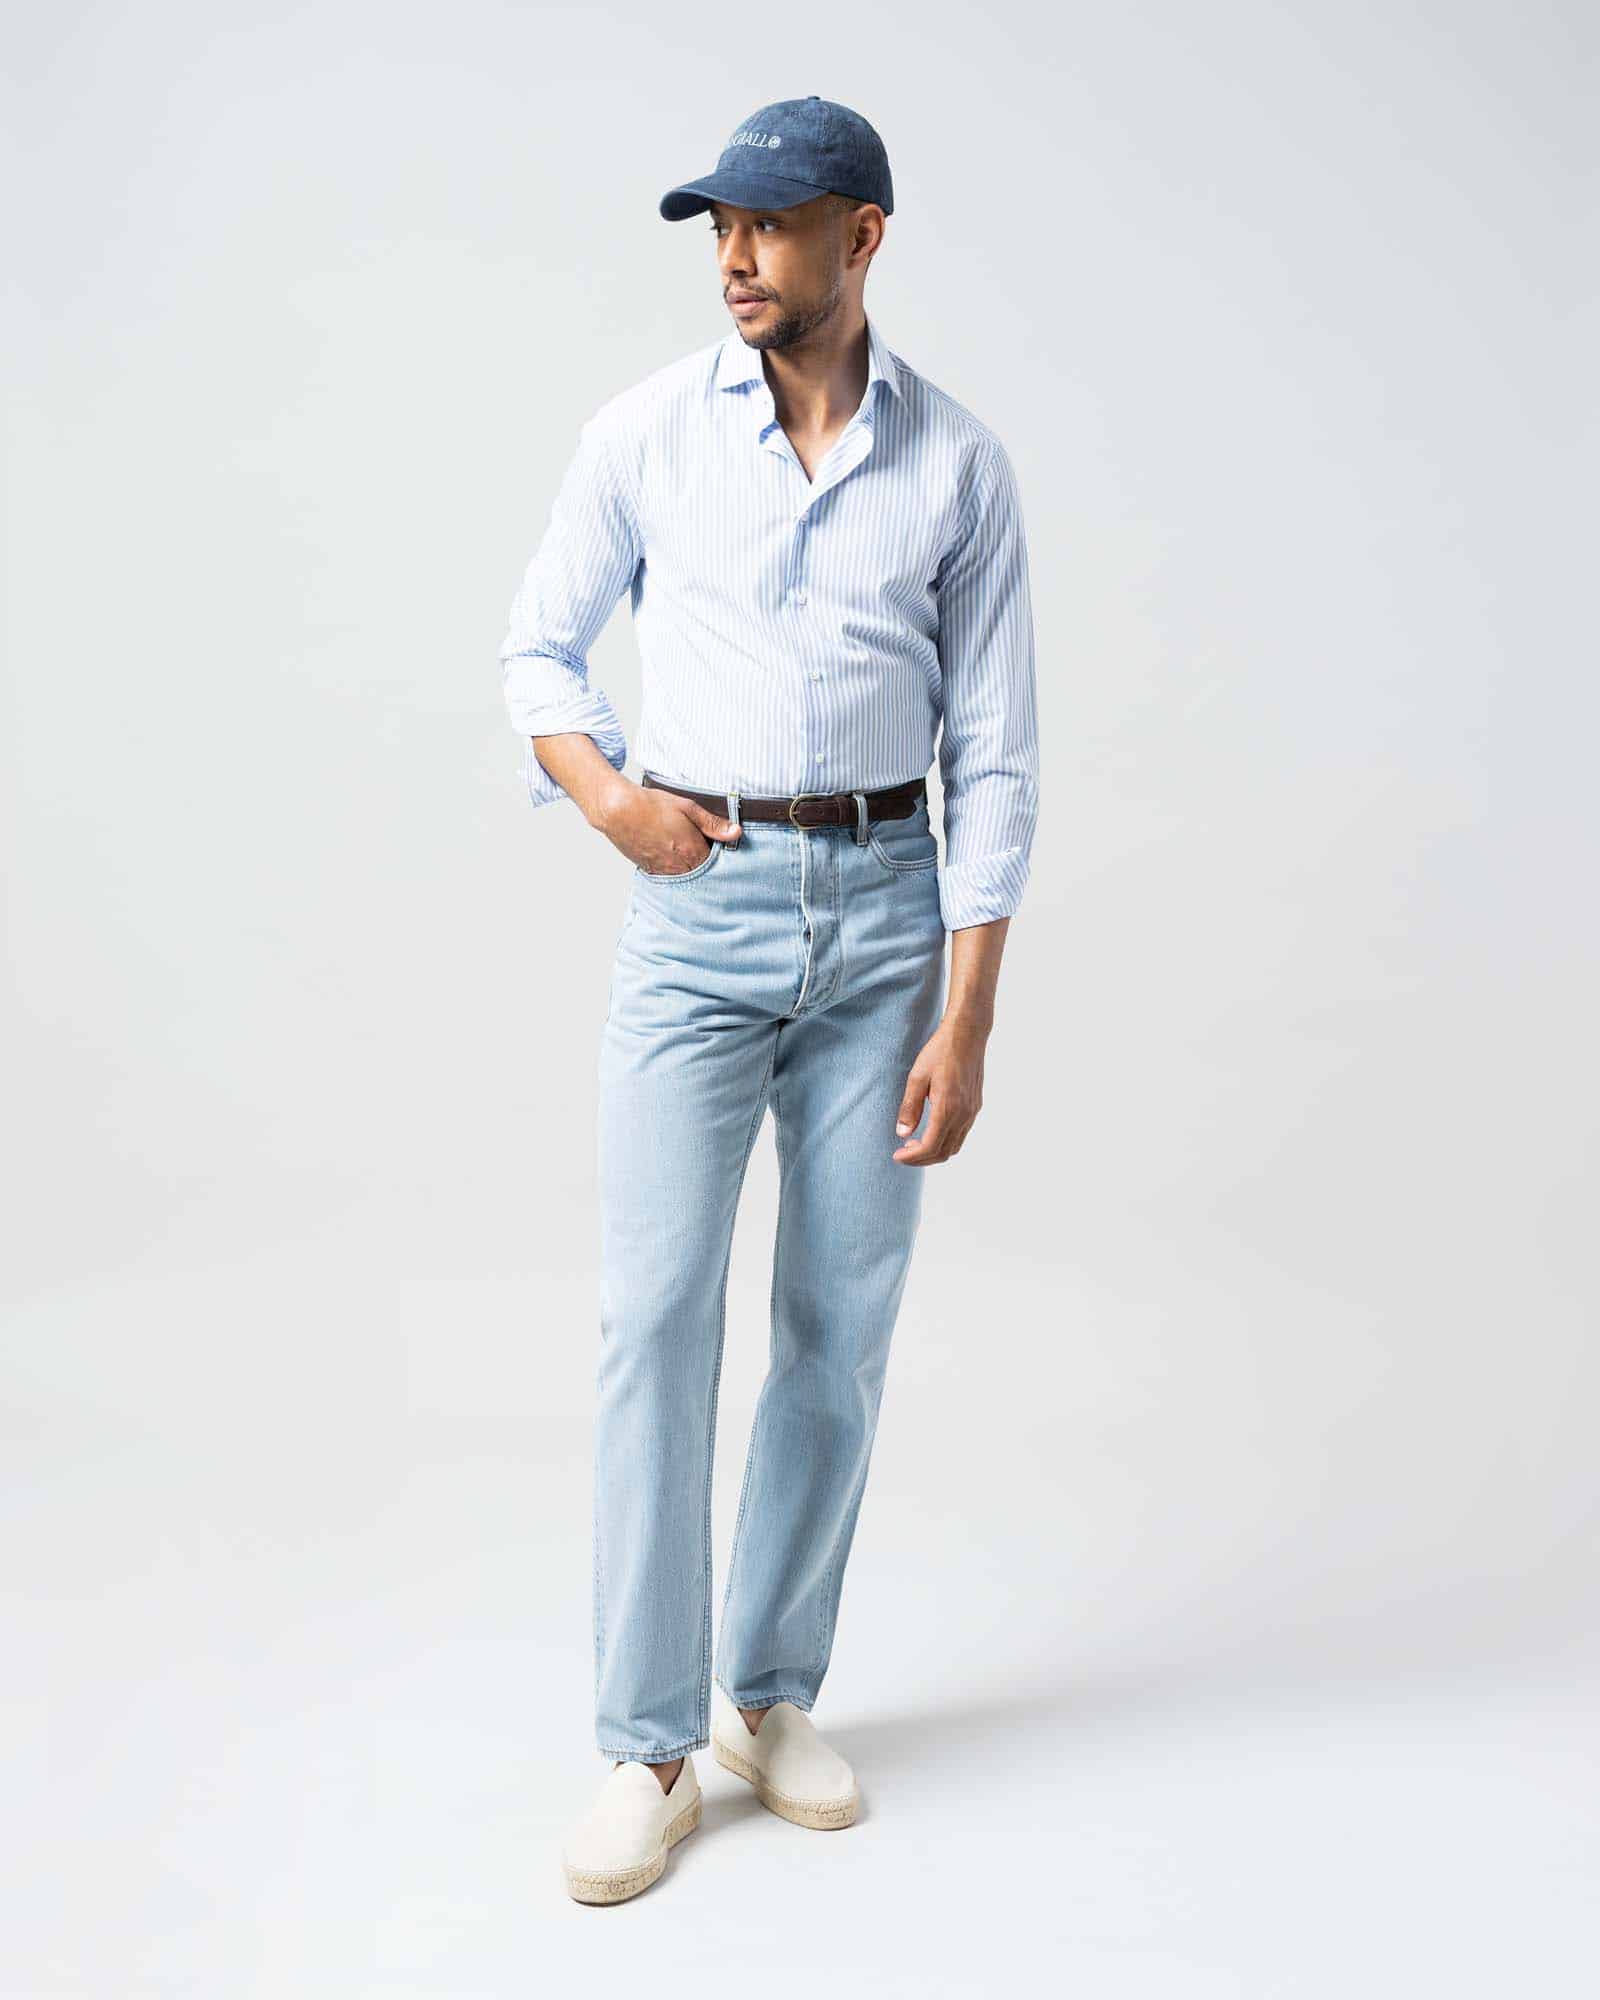 Shirt cotton twill white and blue stripe image 1